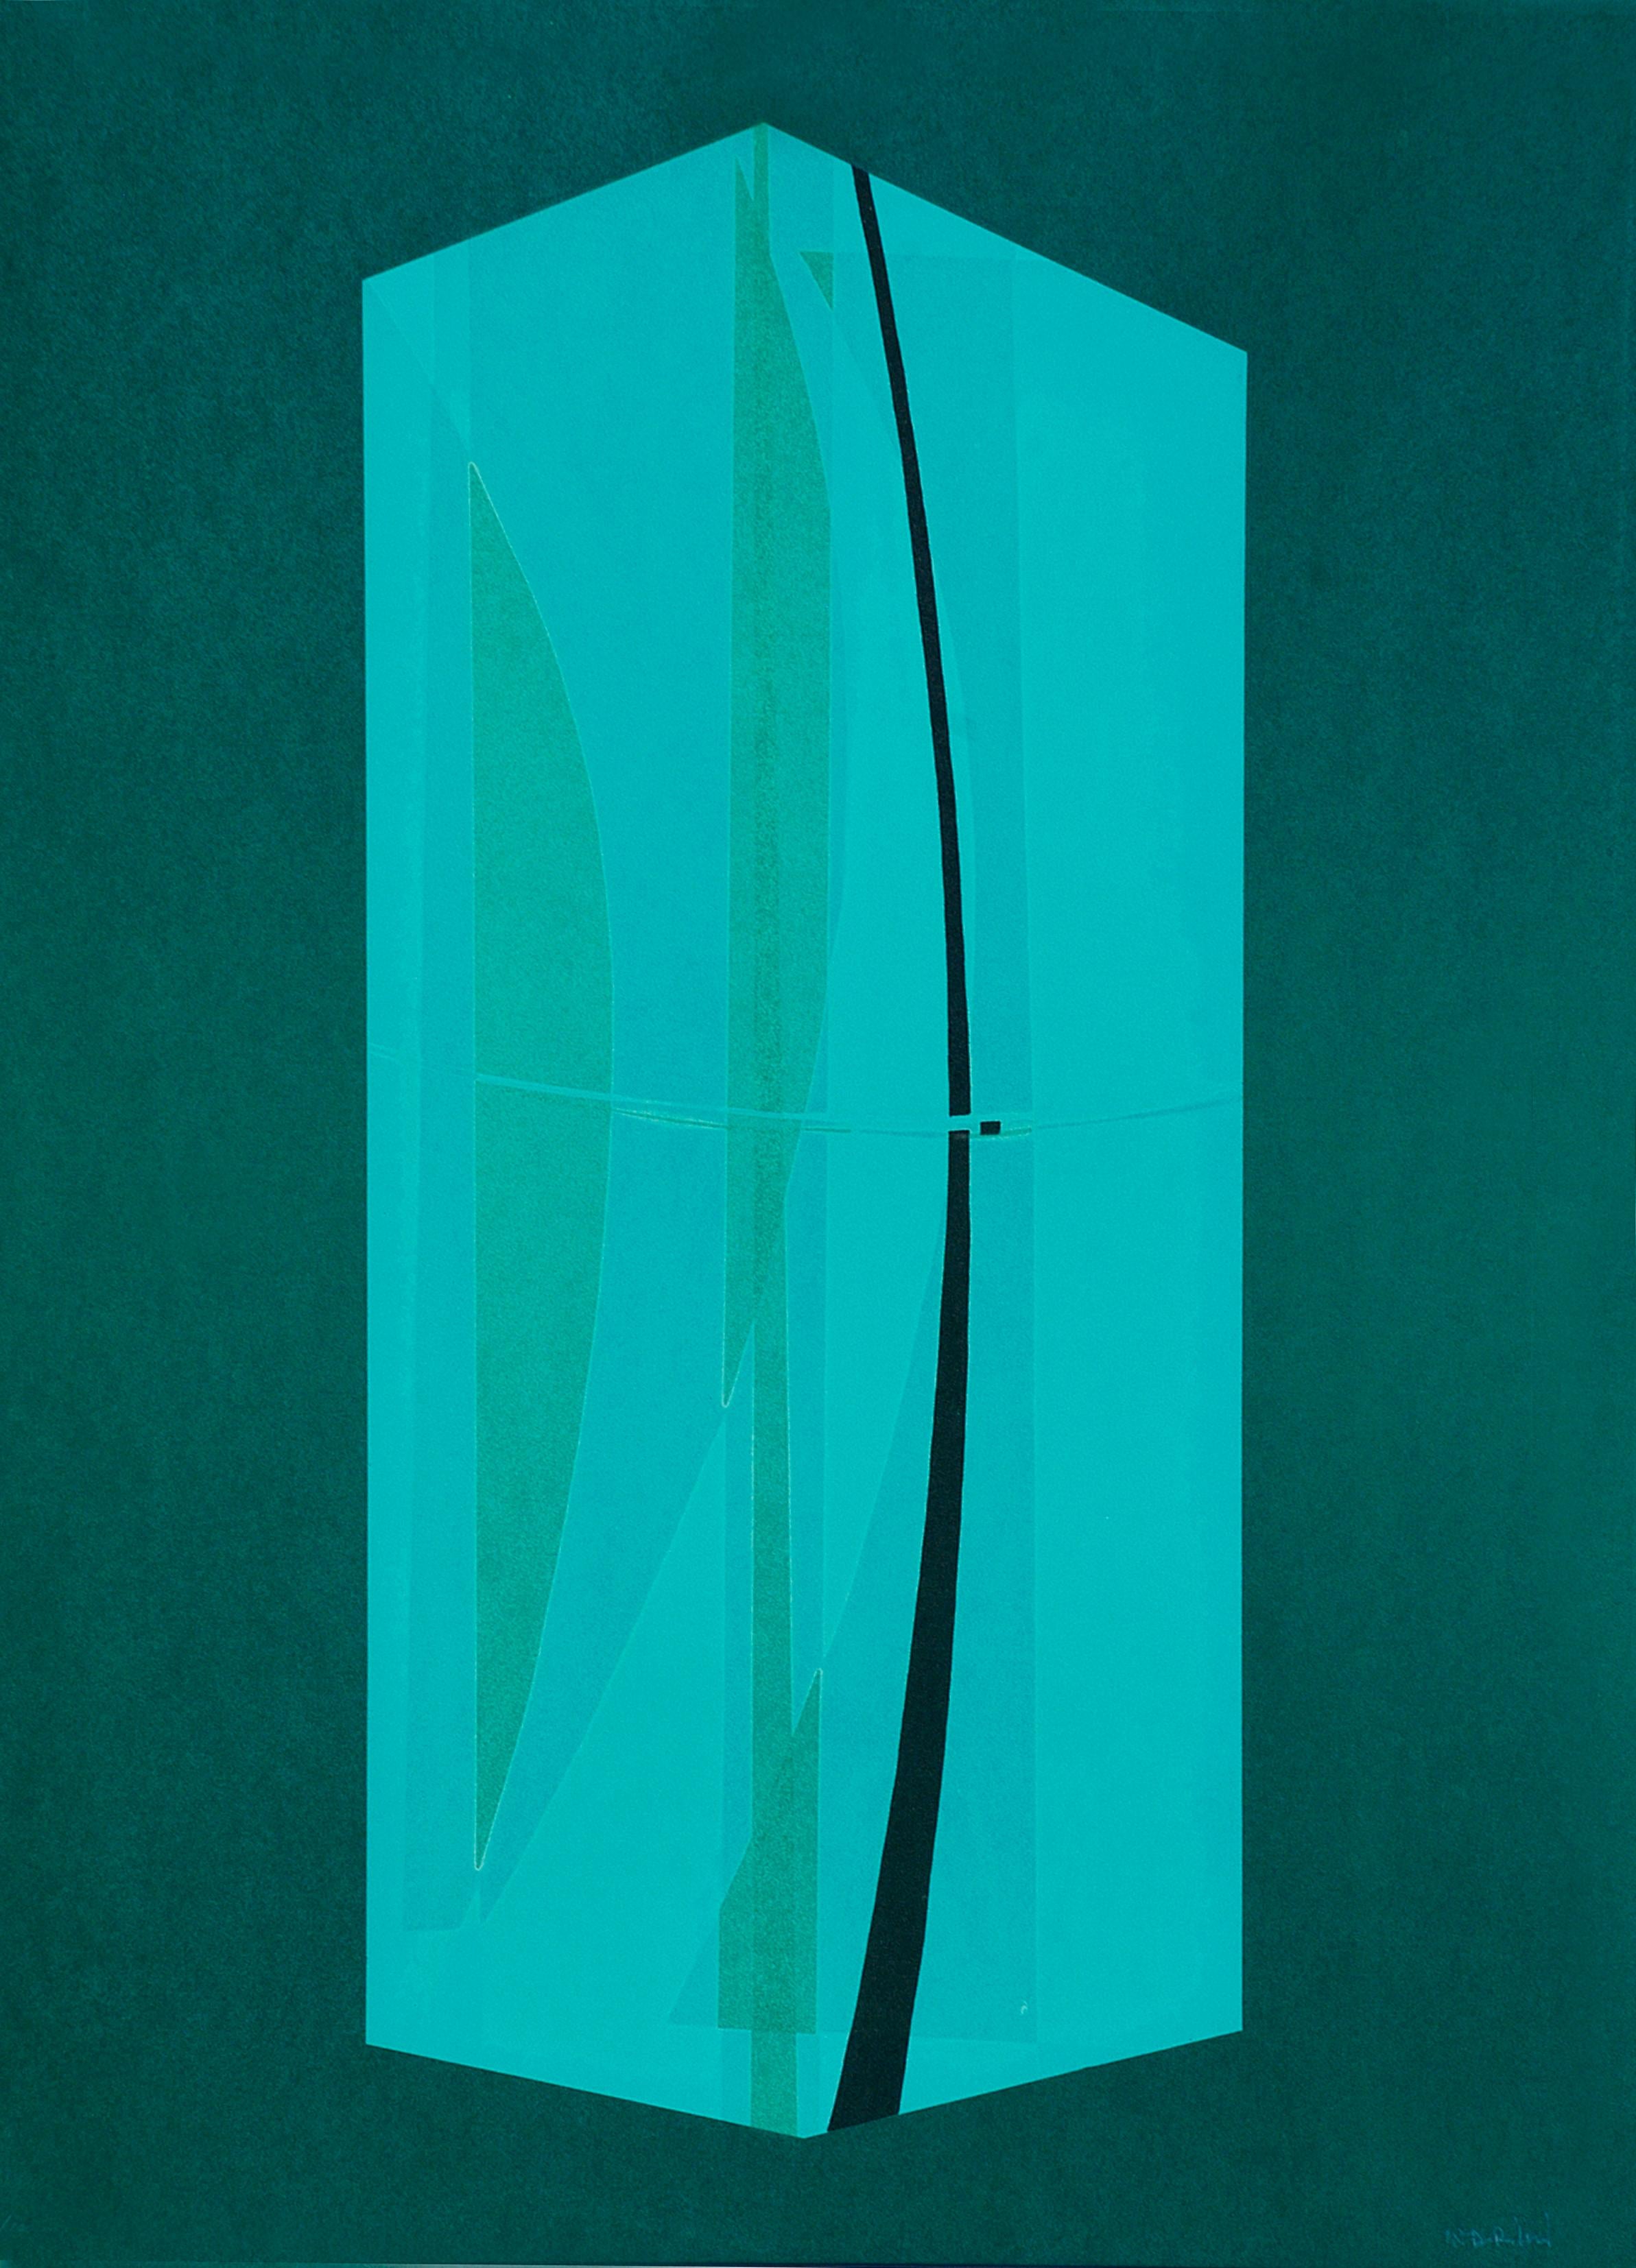 Vert massif - Lithographie originale de Lorenzo Indrimi - 1970 environ